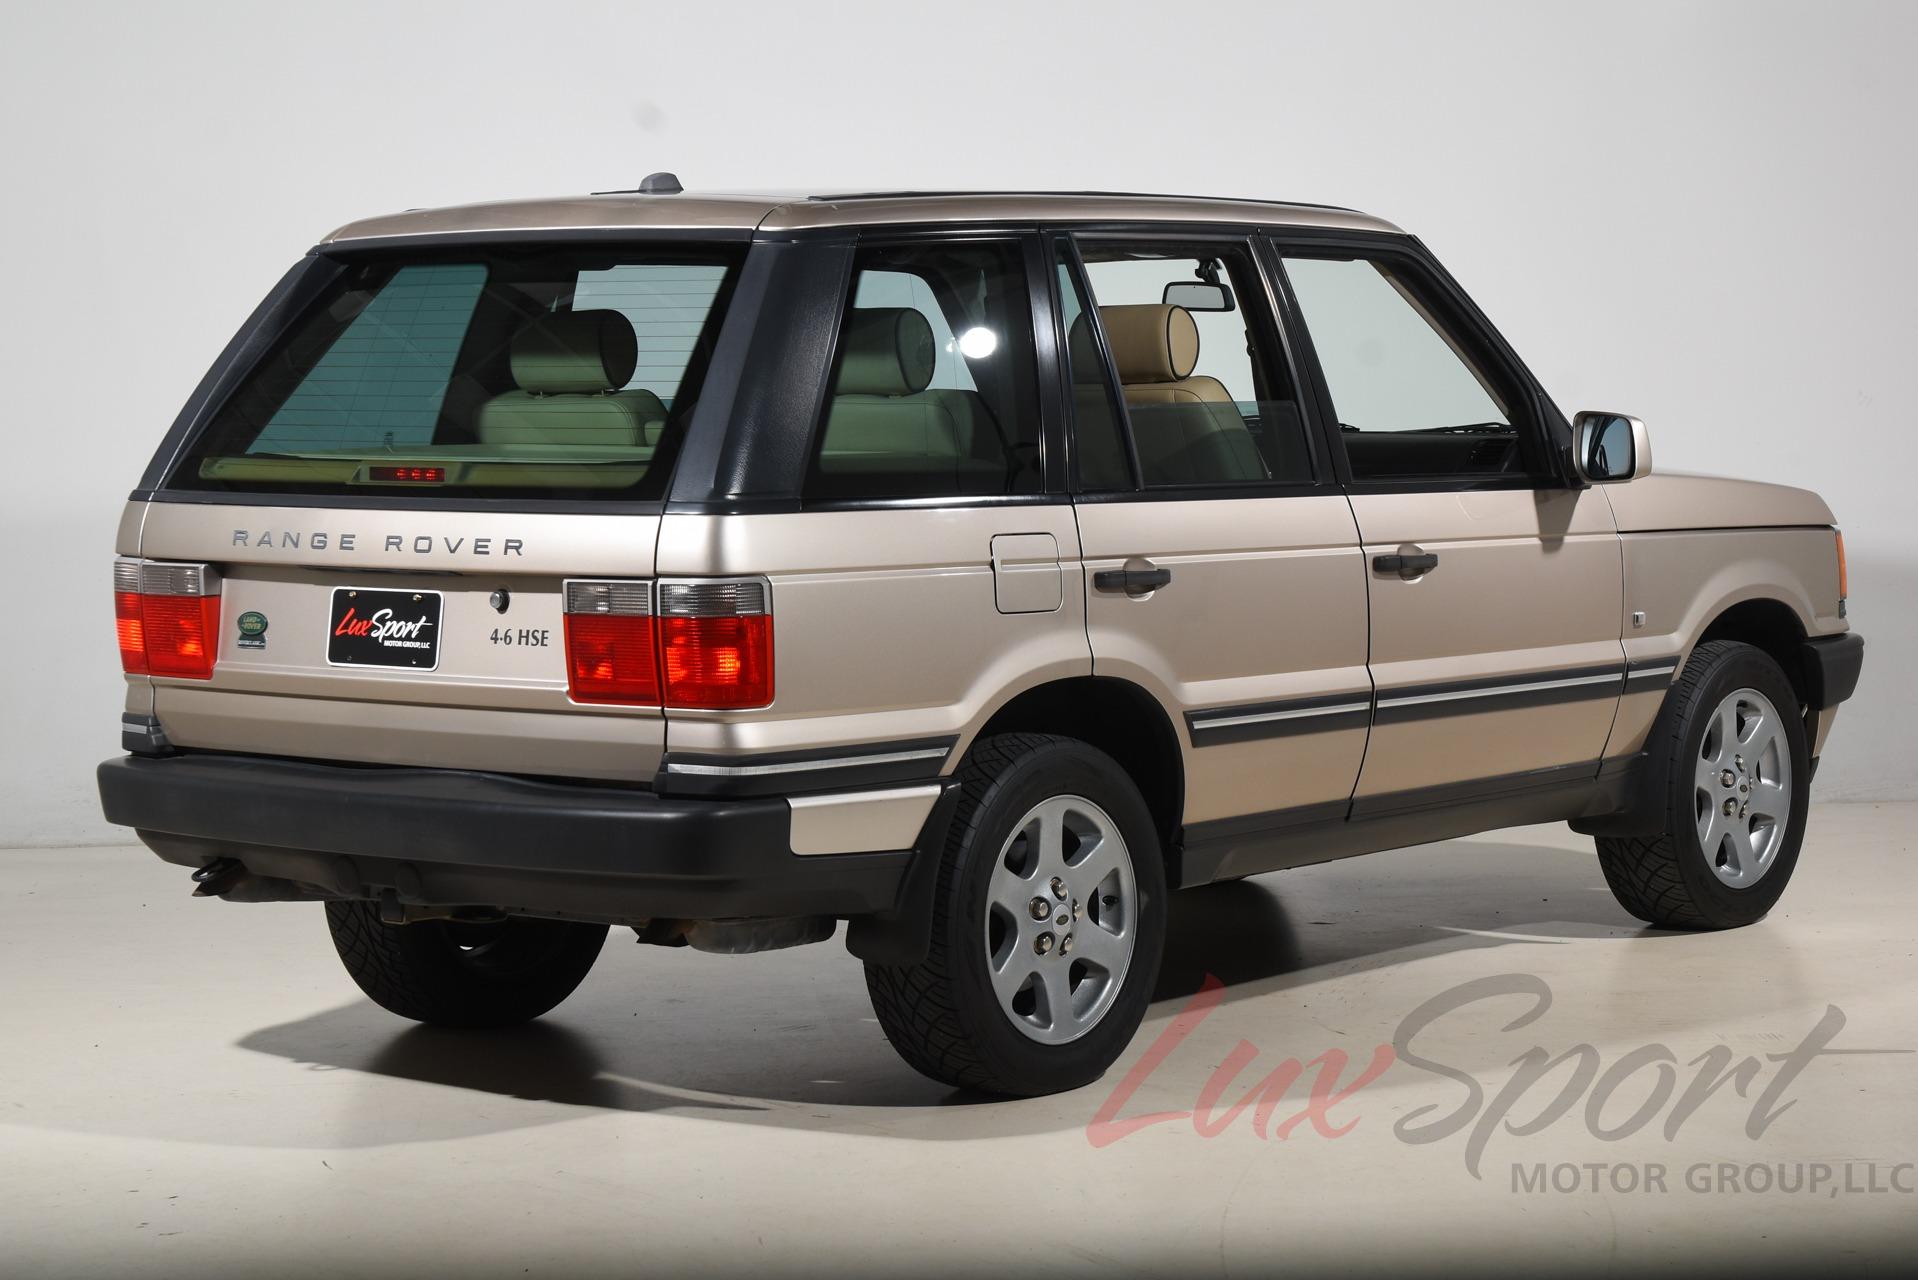 2001 Land Rover Range Rover 4.6 HSE Stock # 2001451 for sale near  Plainview, NY | NY Land Rover Dealer